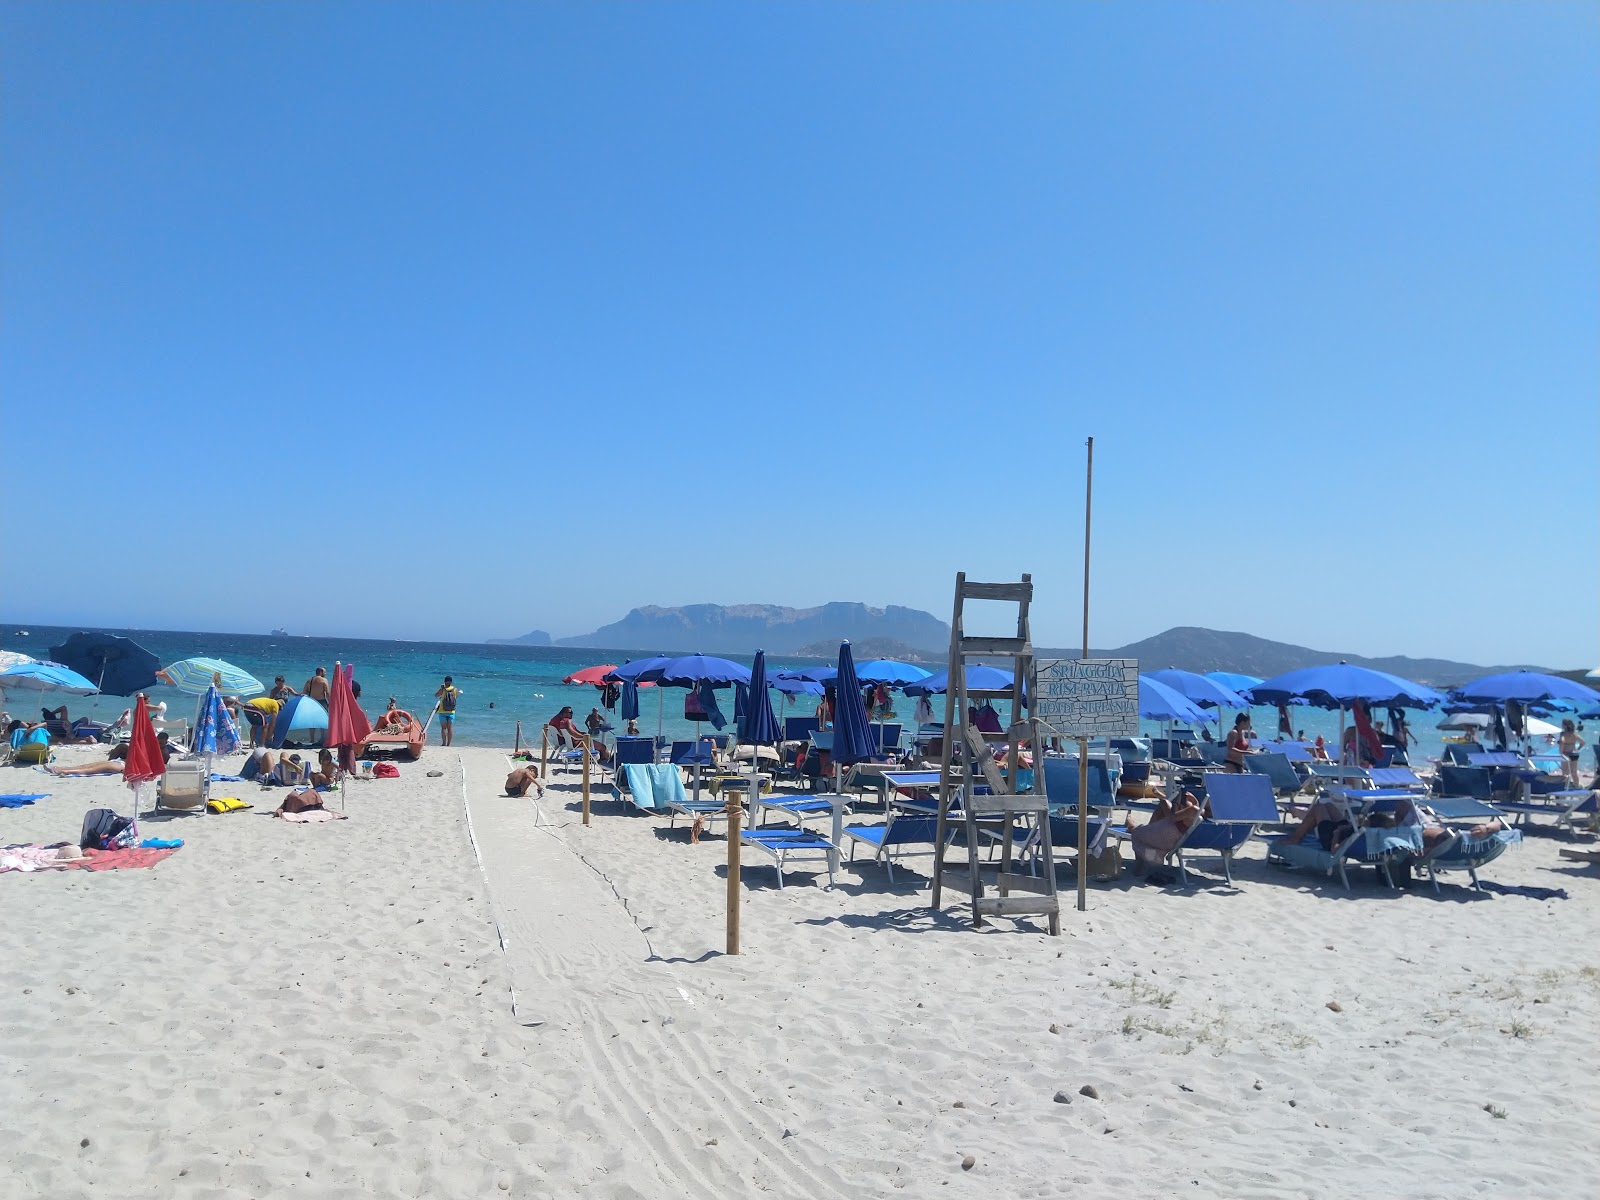 Foto de Playa de Pittulongu - recomendado para viajeros en familia con niños